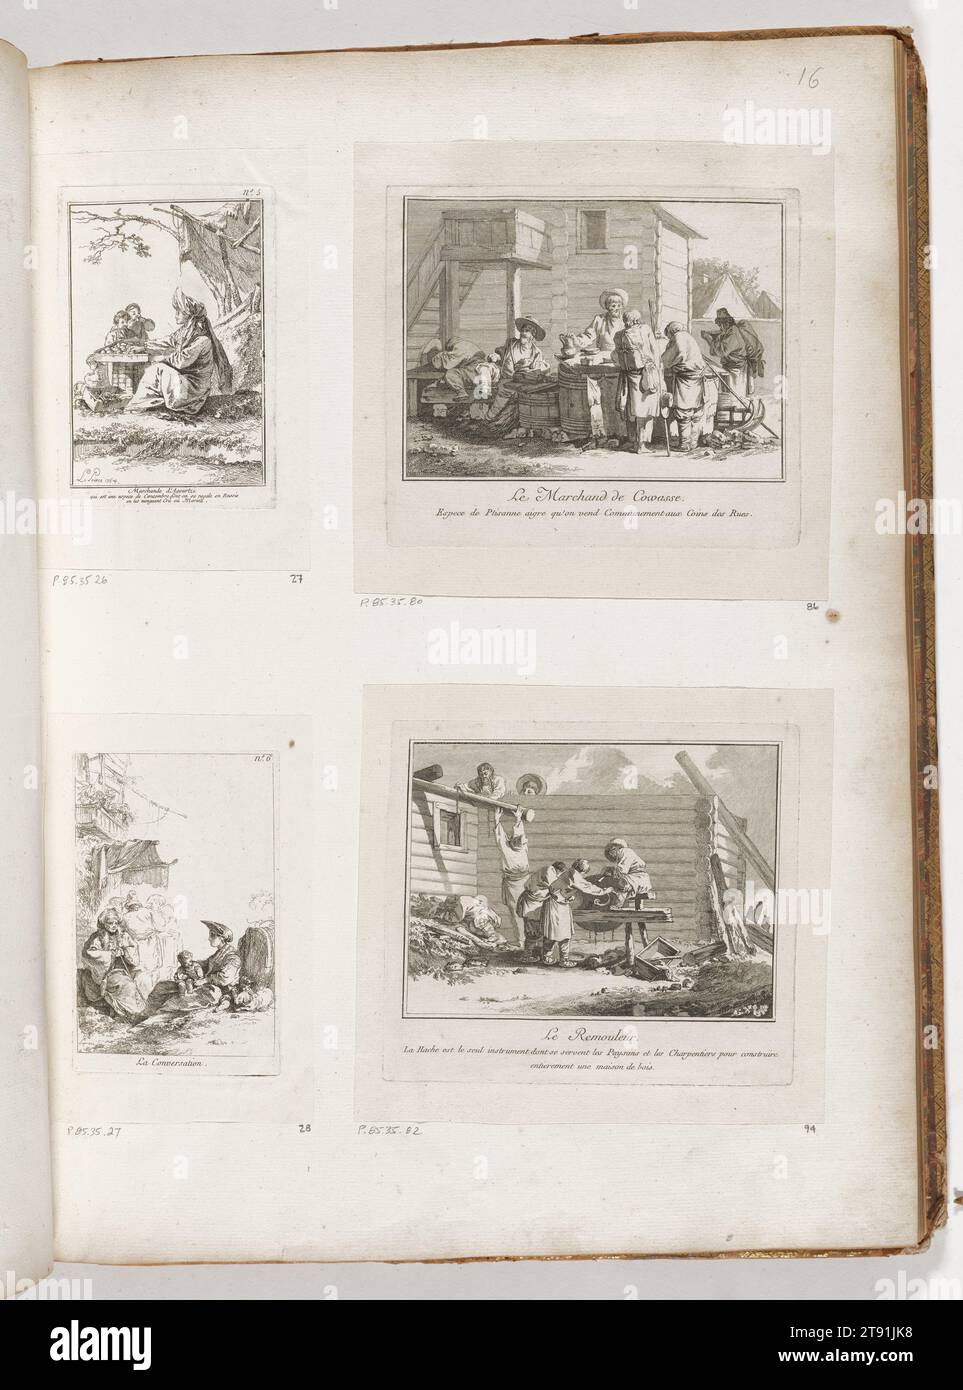 Russian Women Conversing, 1763, Jean-Baptiste Le Prince, French, 1734 - 1781, 5 1/4 x 3 1/2 in. (13.34 x 8.89 cm) (image)5 11/16 x 3 11/16 in. (14.45 x 9.37 cm) (plate)7 1/8 x 4 1/4 in. (18.1 x 10.8 cm) (sheet), Etching, France, 18th century Stock Photo